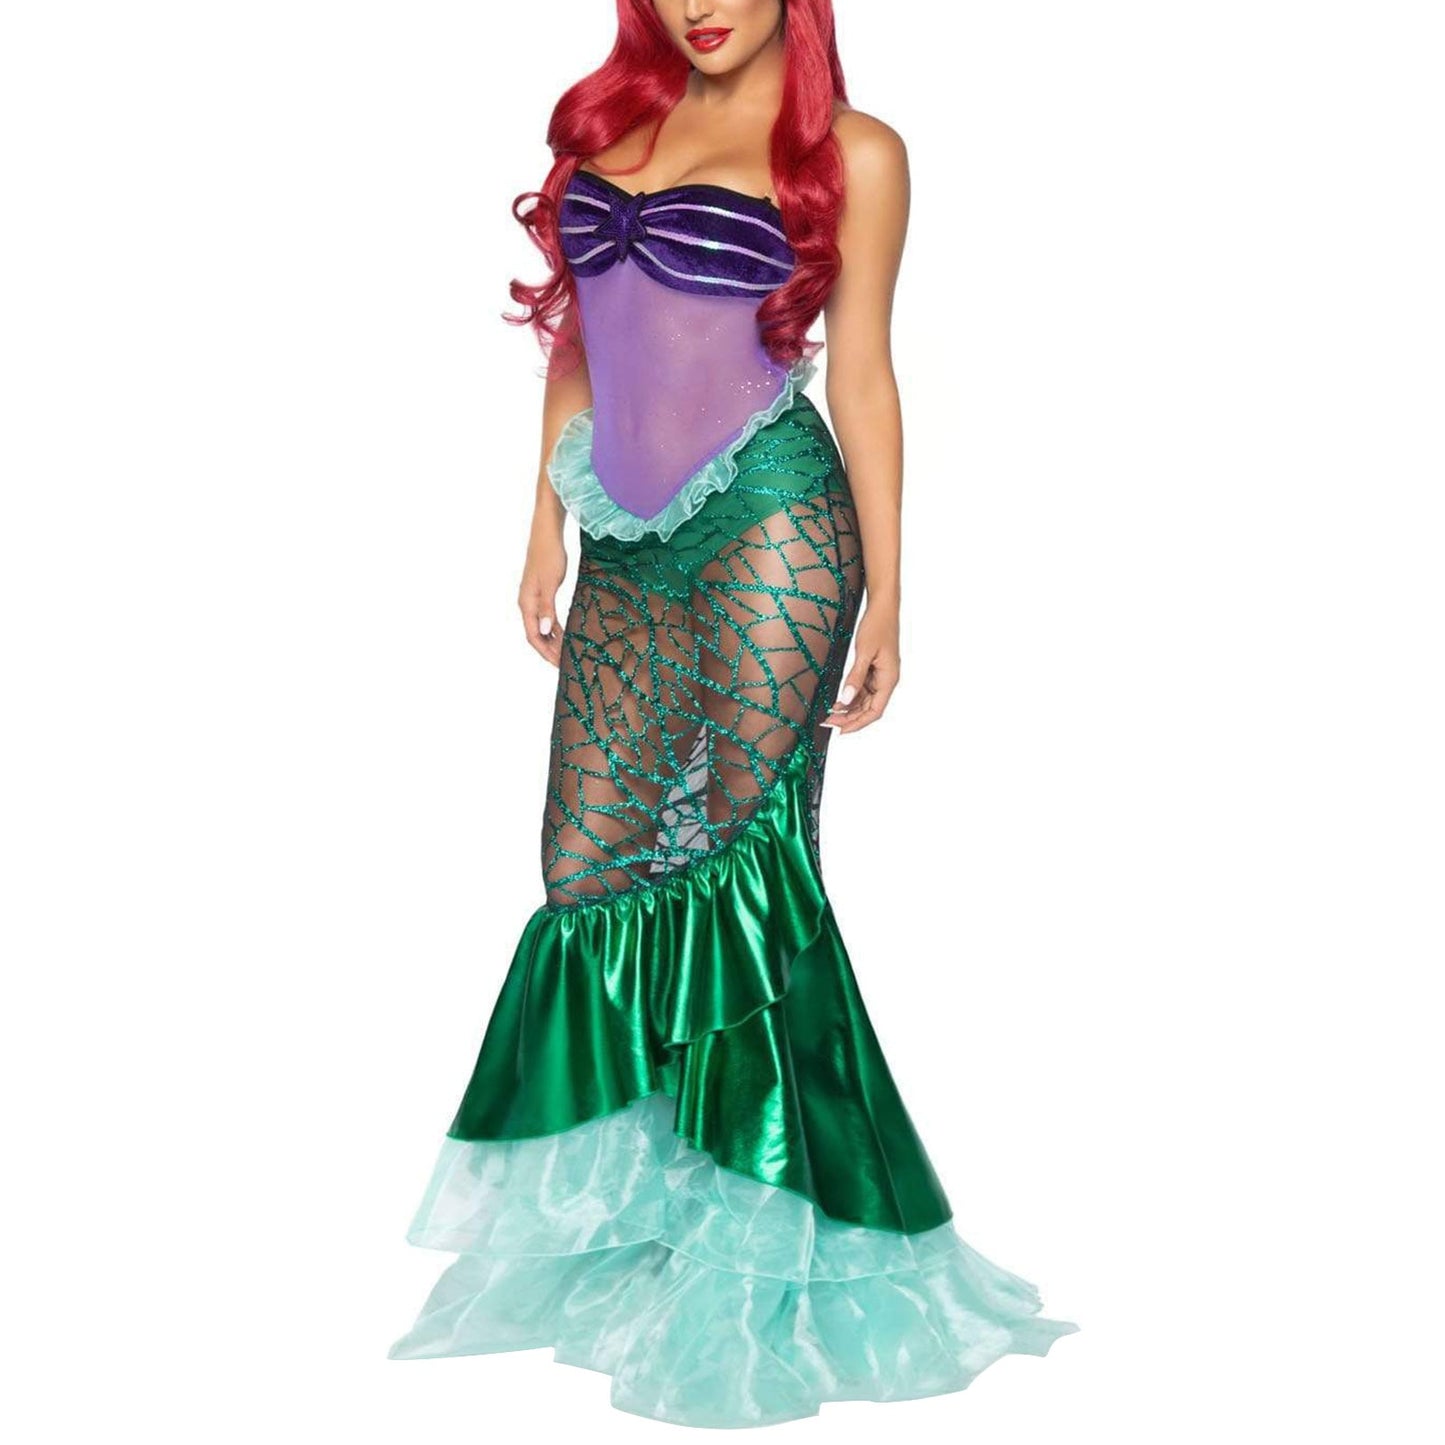 Anime Mermaid Princess Costume for Women